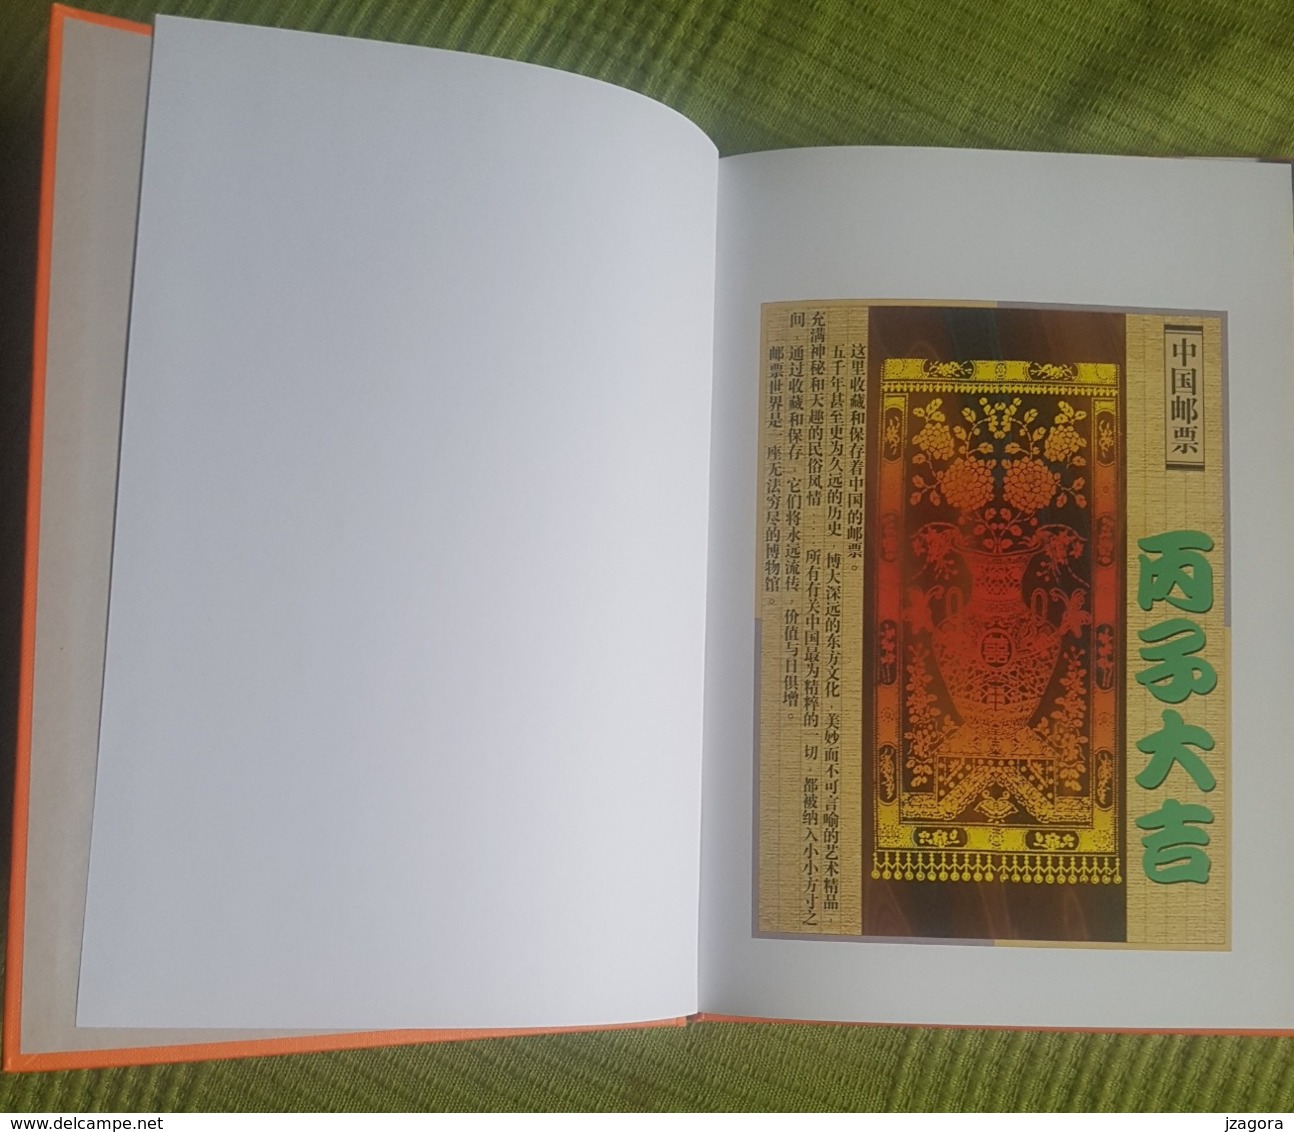 CHINA CHINE 1996 STAMP YEAR BOOK 50 PAGES - LIBRO DEL AÑO DEL SELLO BRIEFMARKENJAHRBUCH 50 SEITEN ANNÉE LIVRE - Unused Stamps